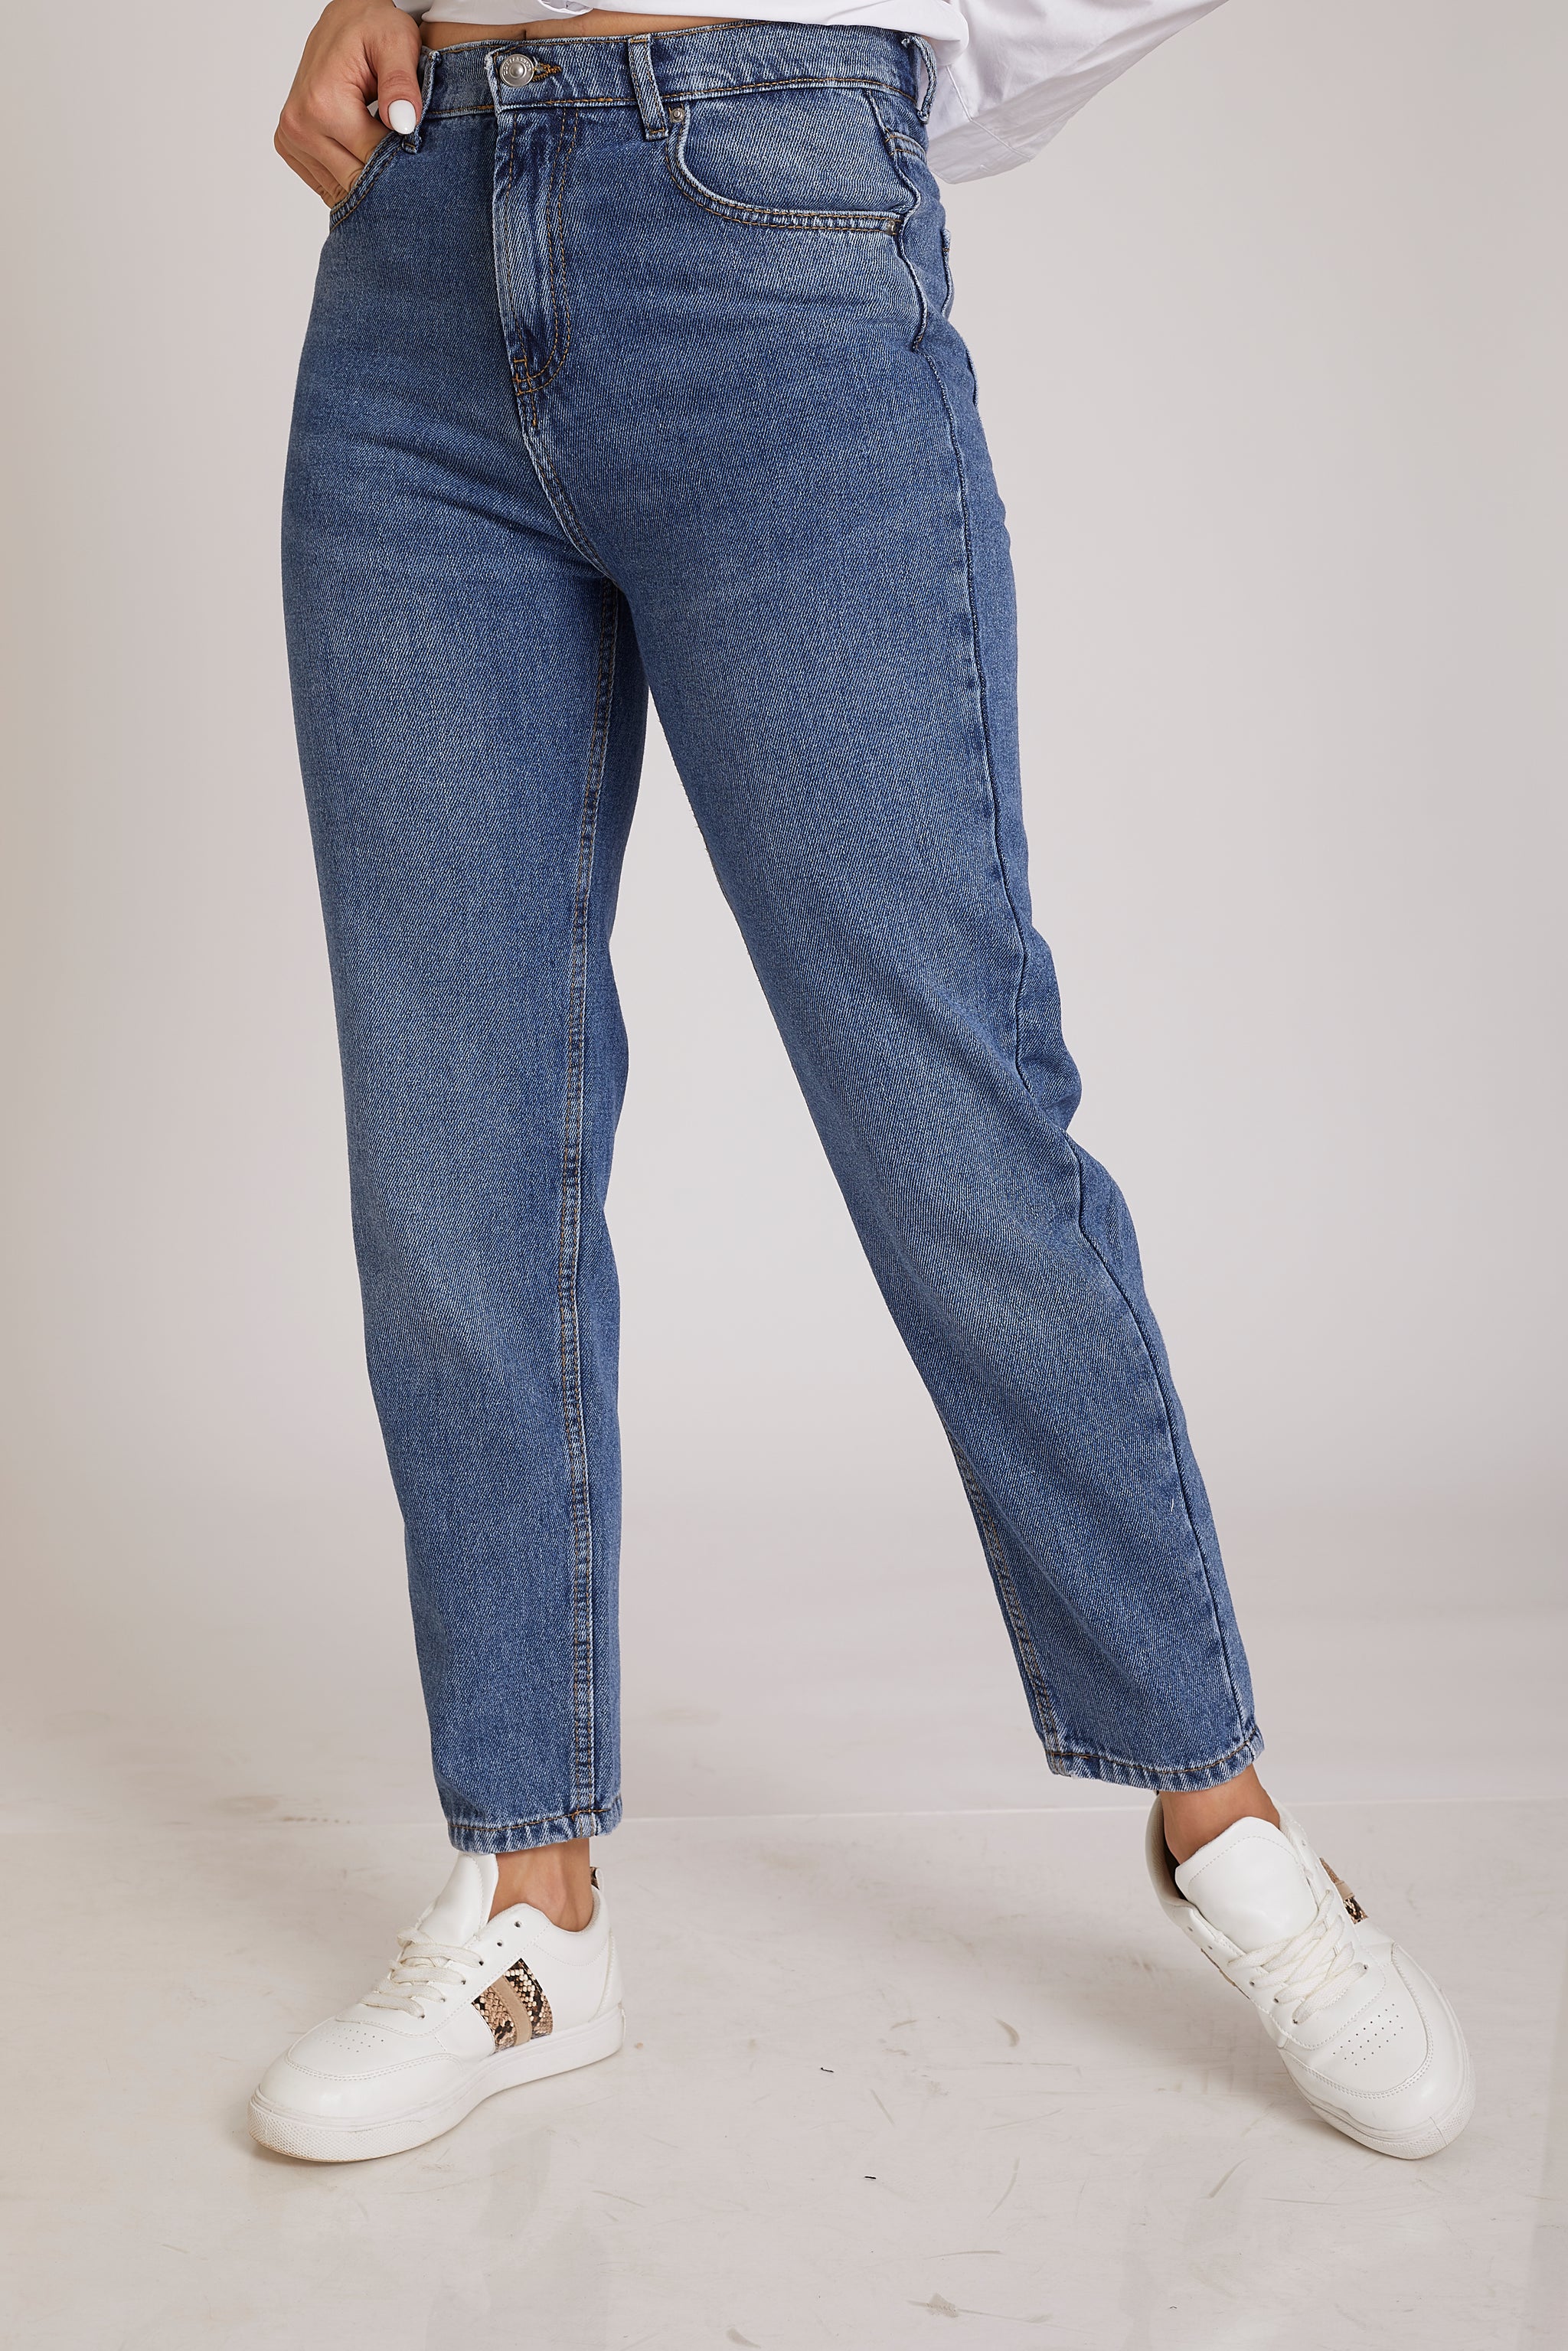 Mom Fit Jeans - Plus Size - For Women – DOTT JEANS